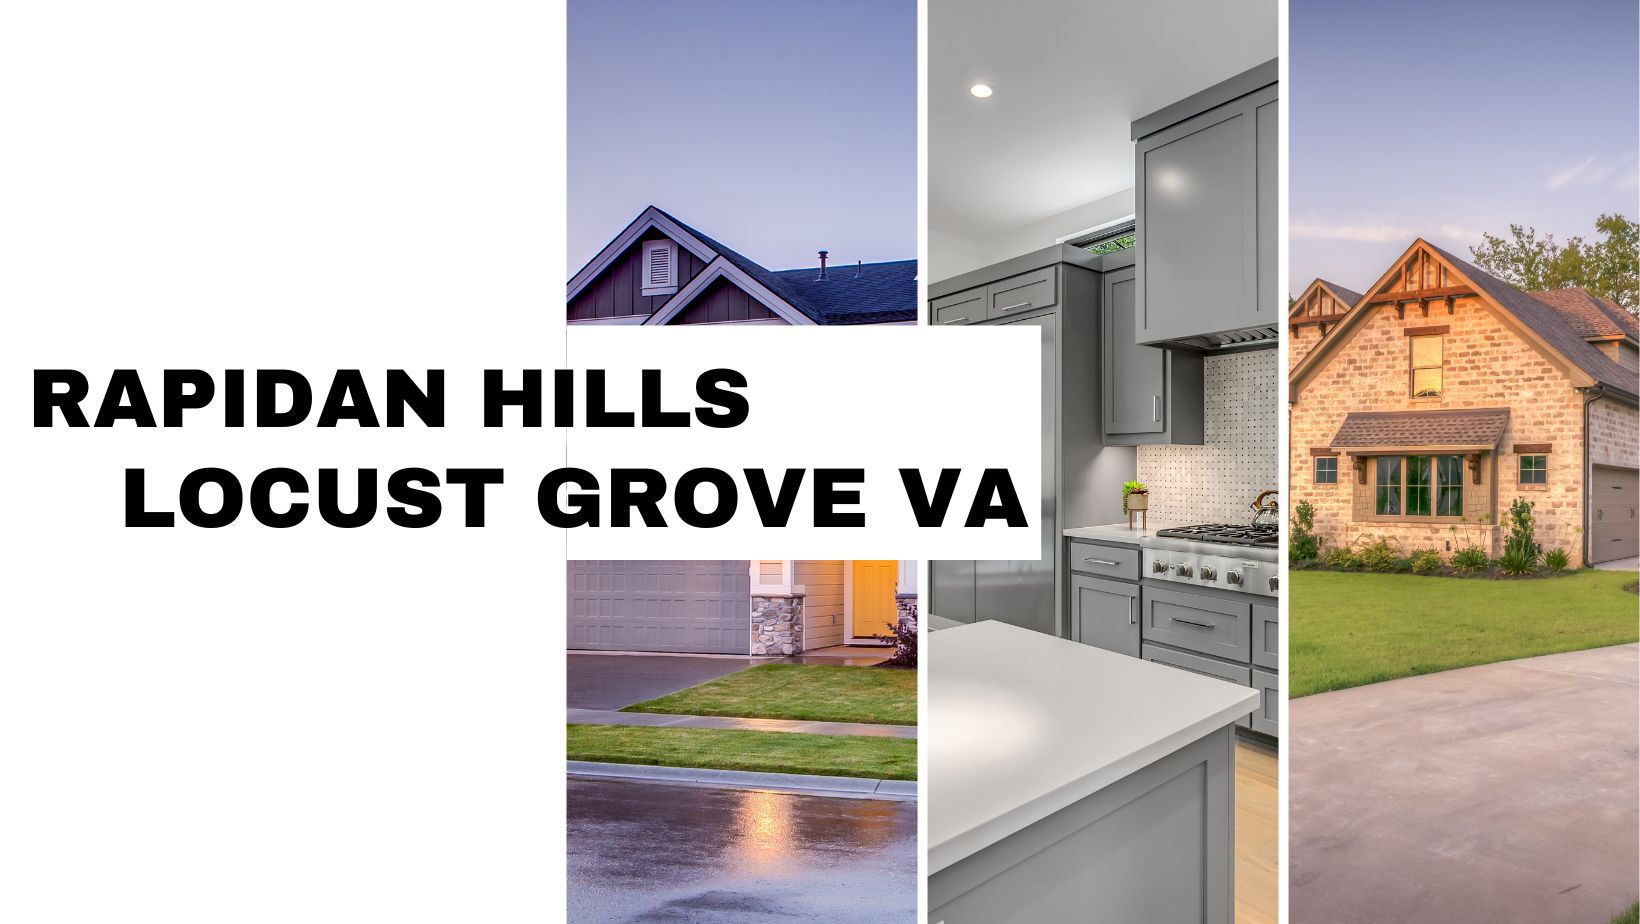 Rapidan Hills Locust Grove VA Homes for Sale